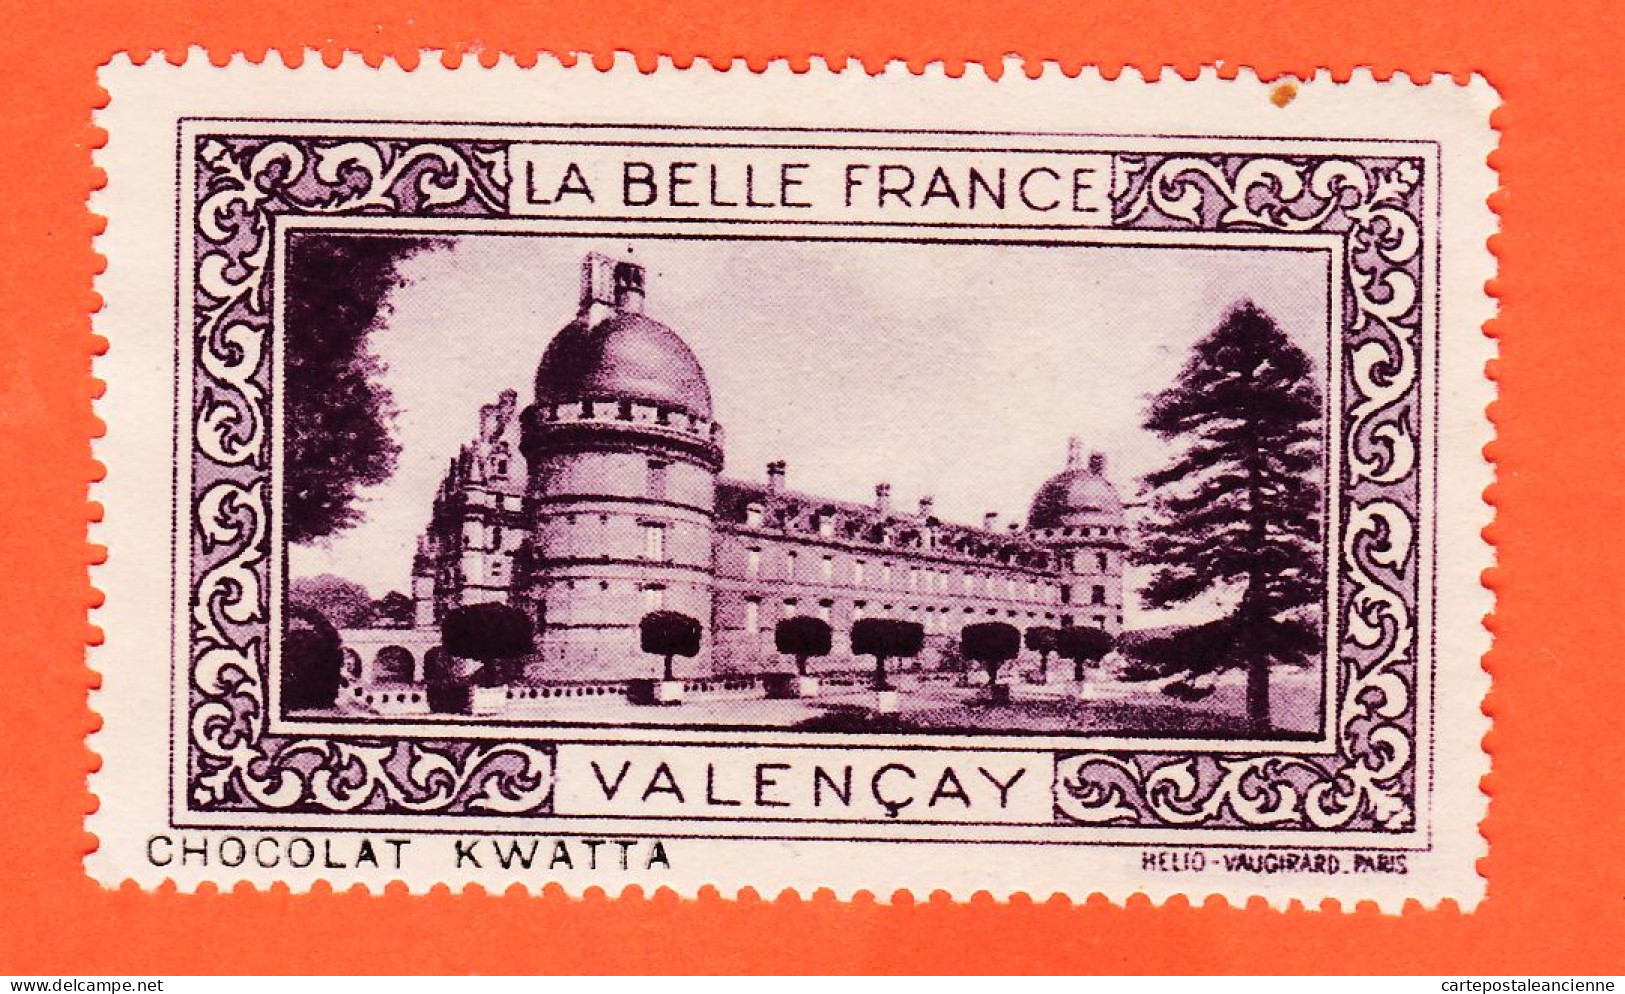 13024 / ⭐ ◉ VALENCAY 36-Indre Chateau Pub Chocolat KWATTA Vignette Collection LA BELLE FRANCE HELIO-VAUGIRARD - Turismo (Viñetas)